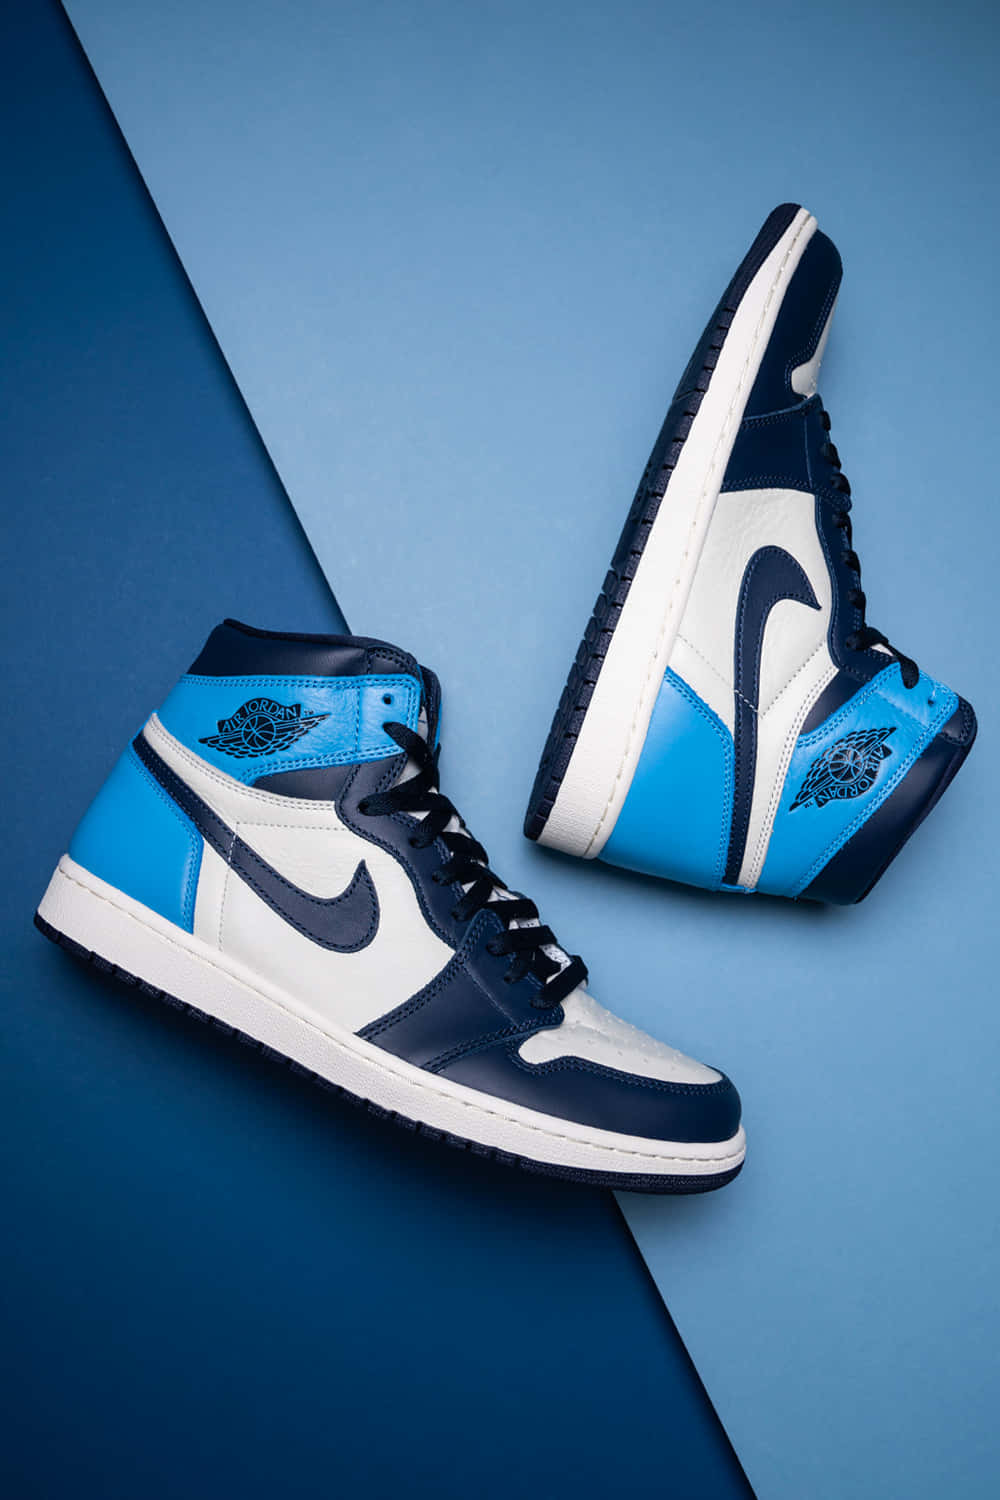 Download Nike Air Jordan 1 Retro High Og bluewhite Wallpaper  Wallpapers com